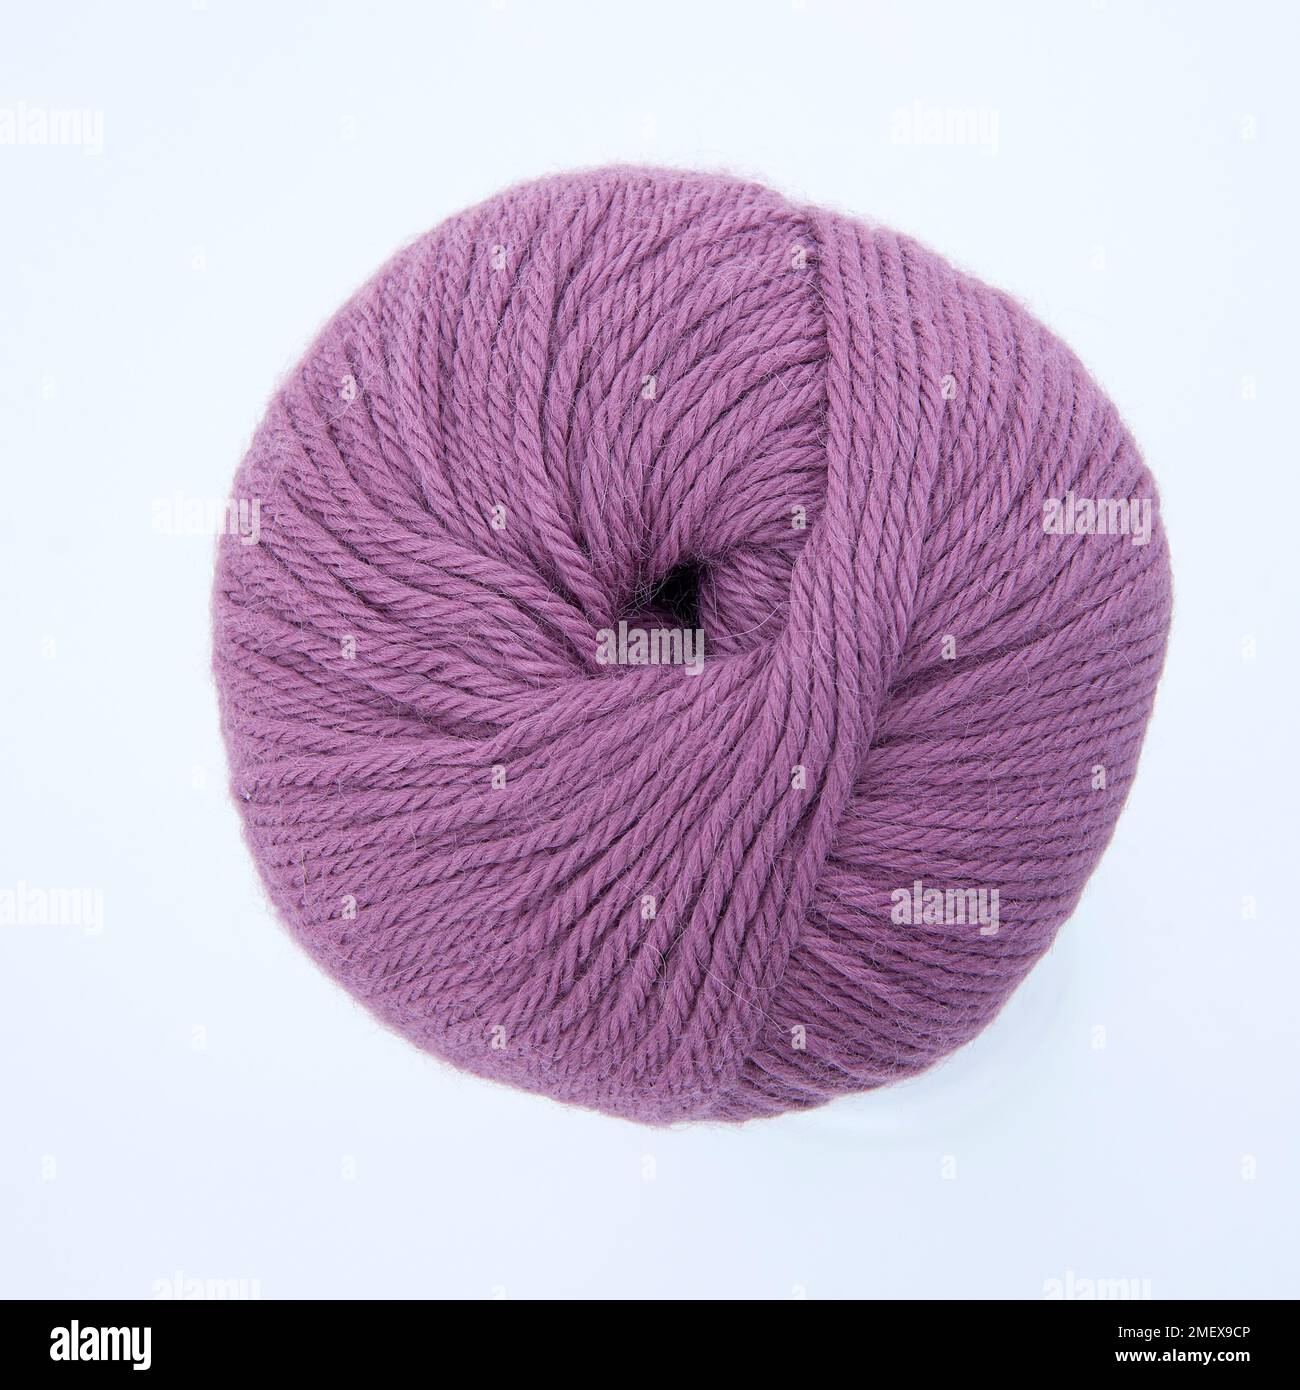 Crochet equiment-Alpaca yarn Stock Photo